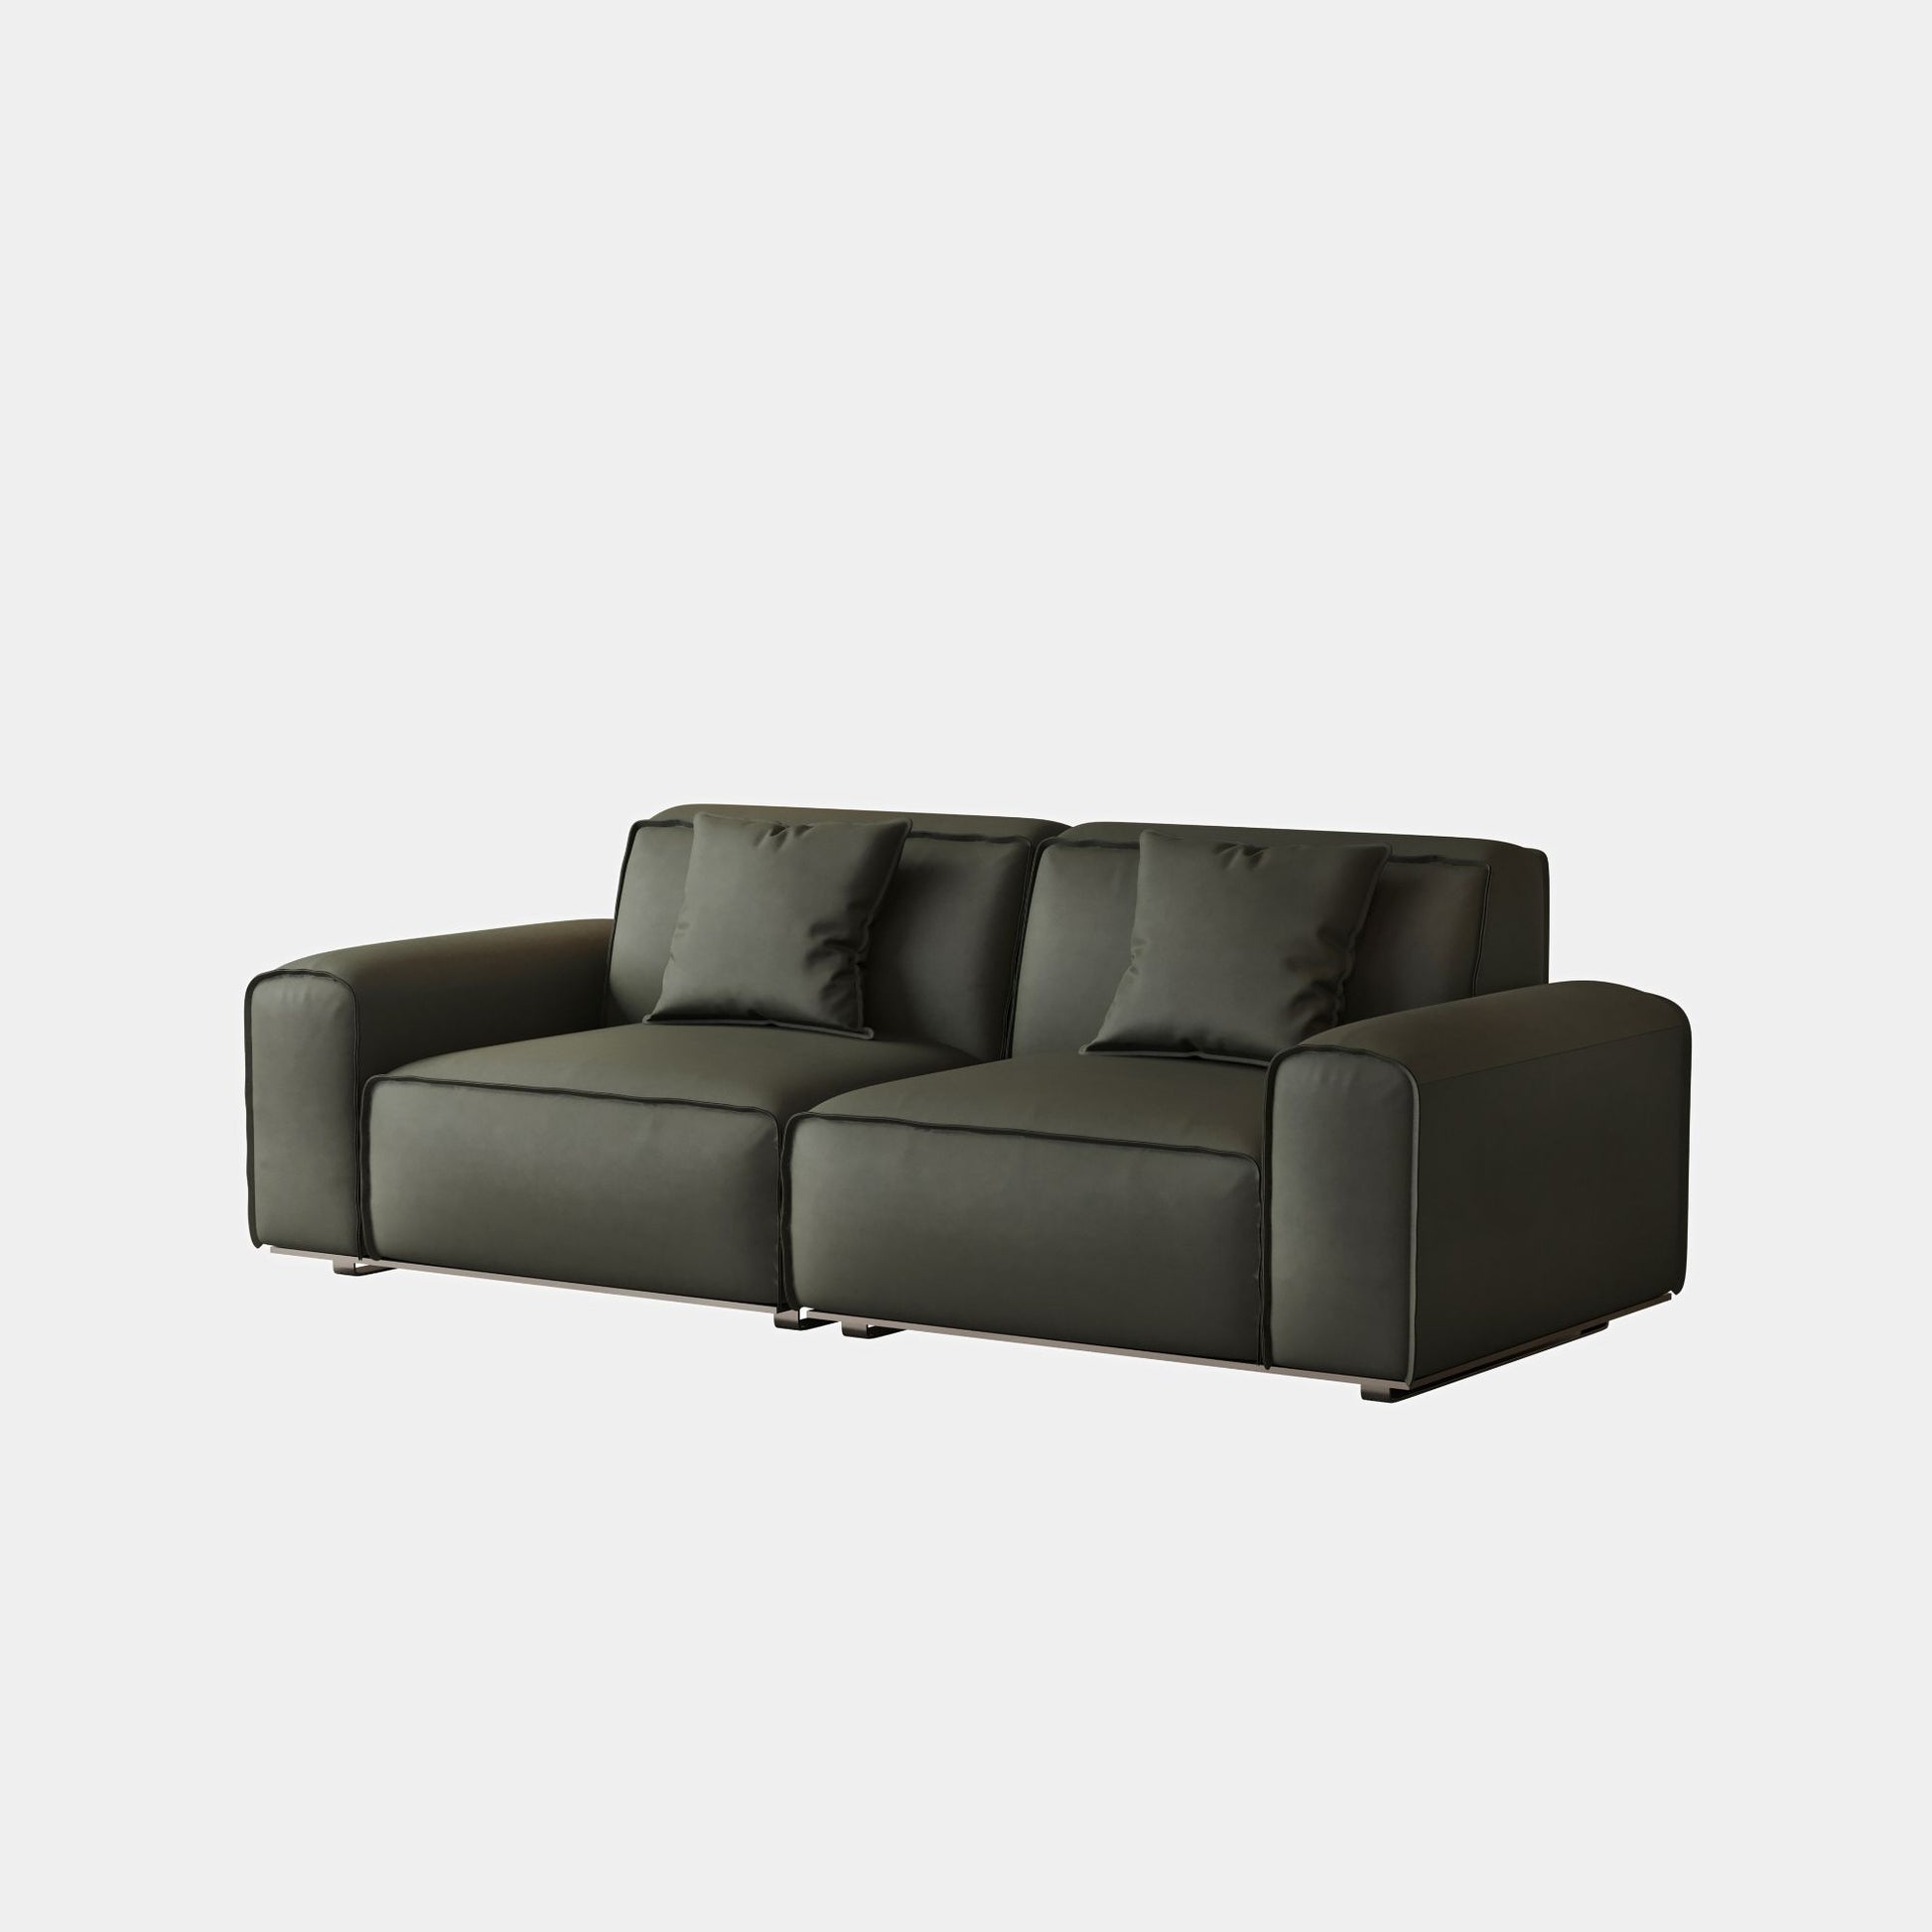 Colby dark green top grain full leather 2 seat sofa